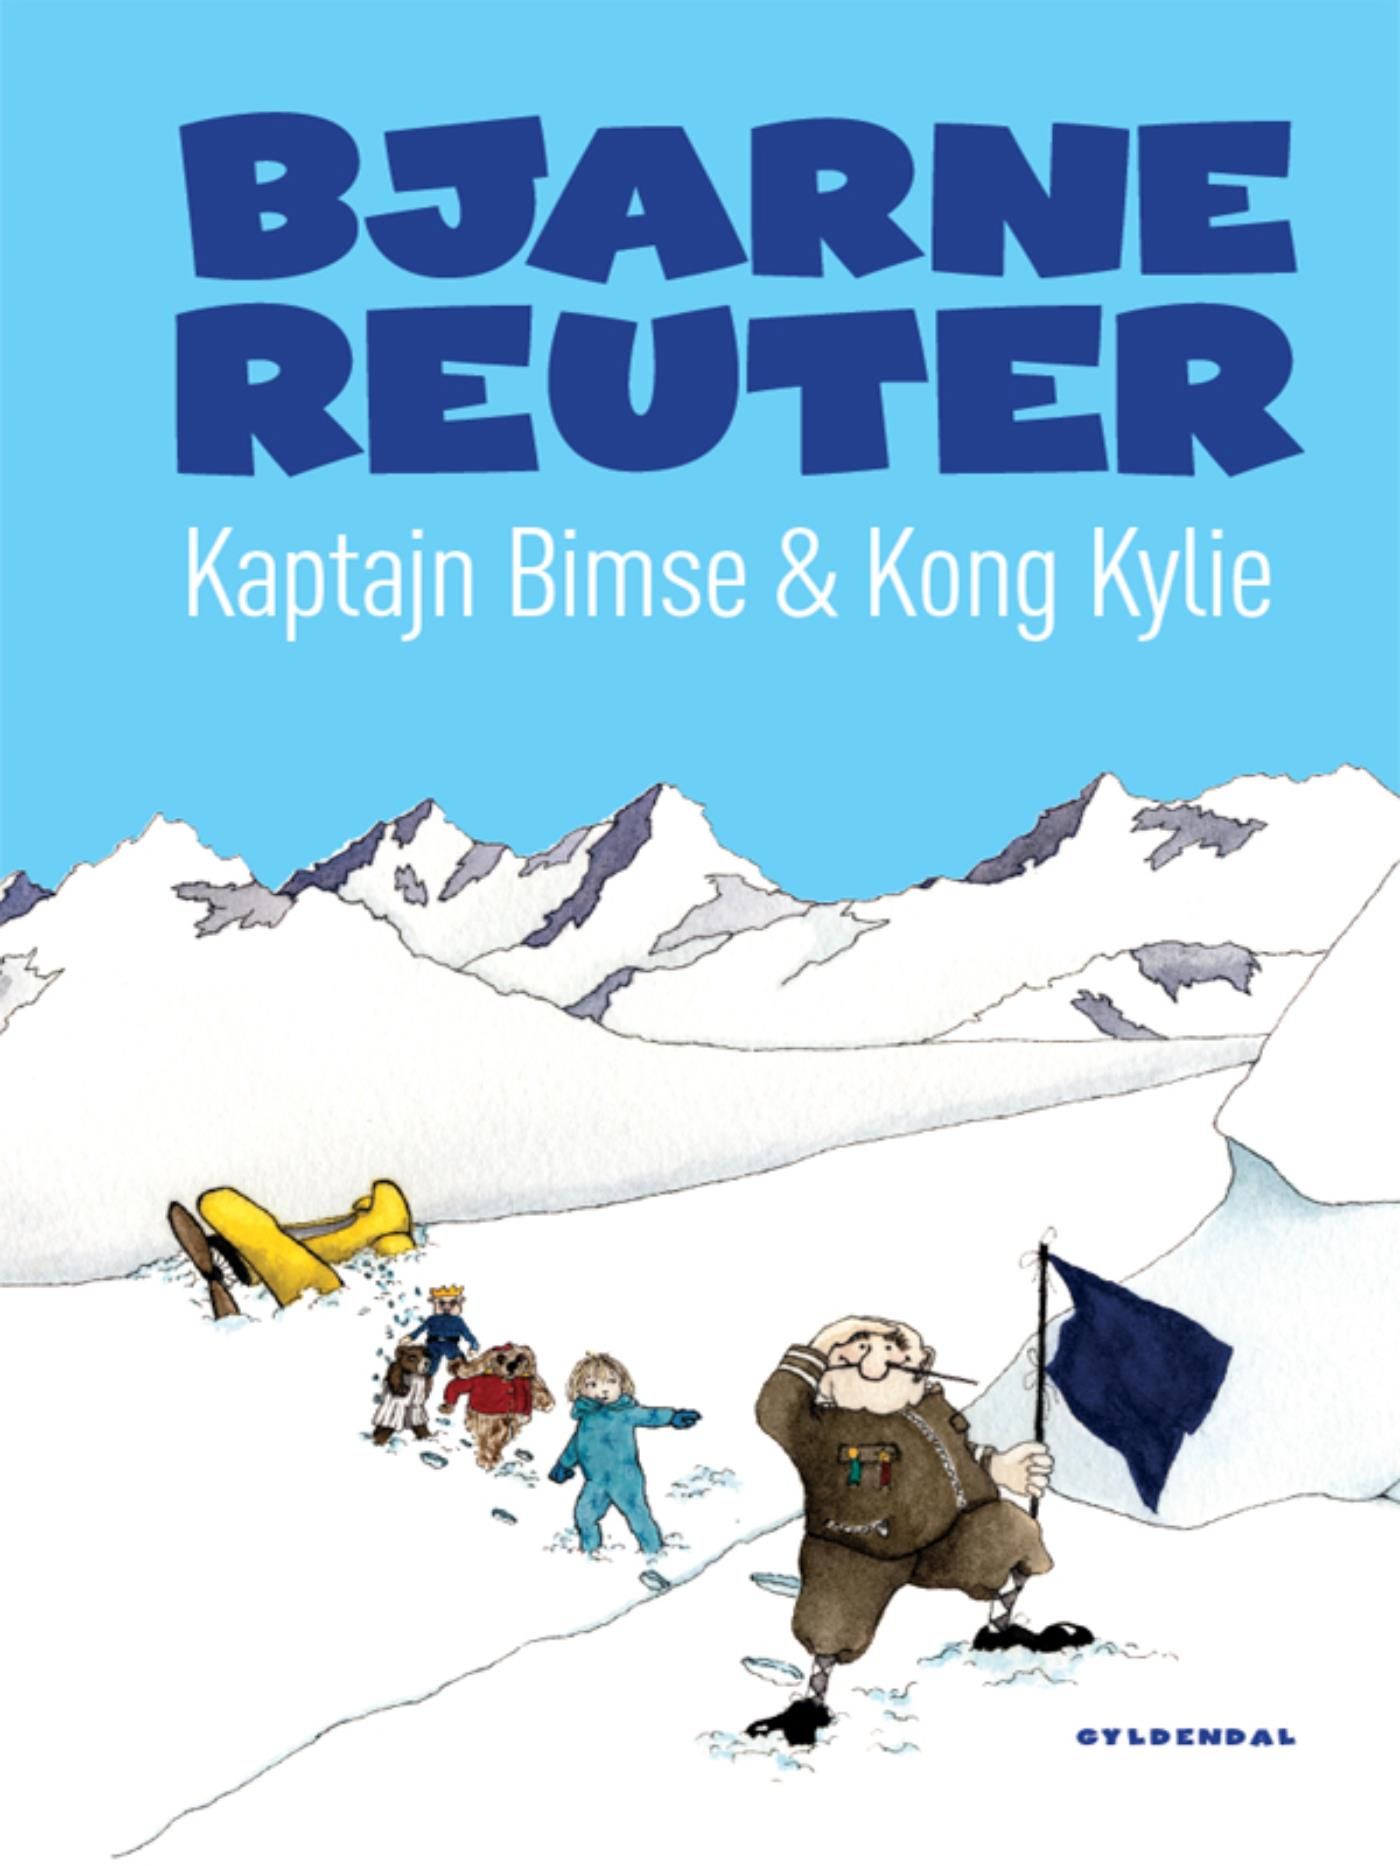 Kaptajn Bimse & Kong Kylie, eBook by Bjarne Reuter